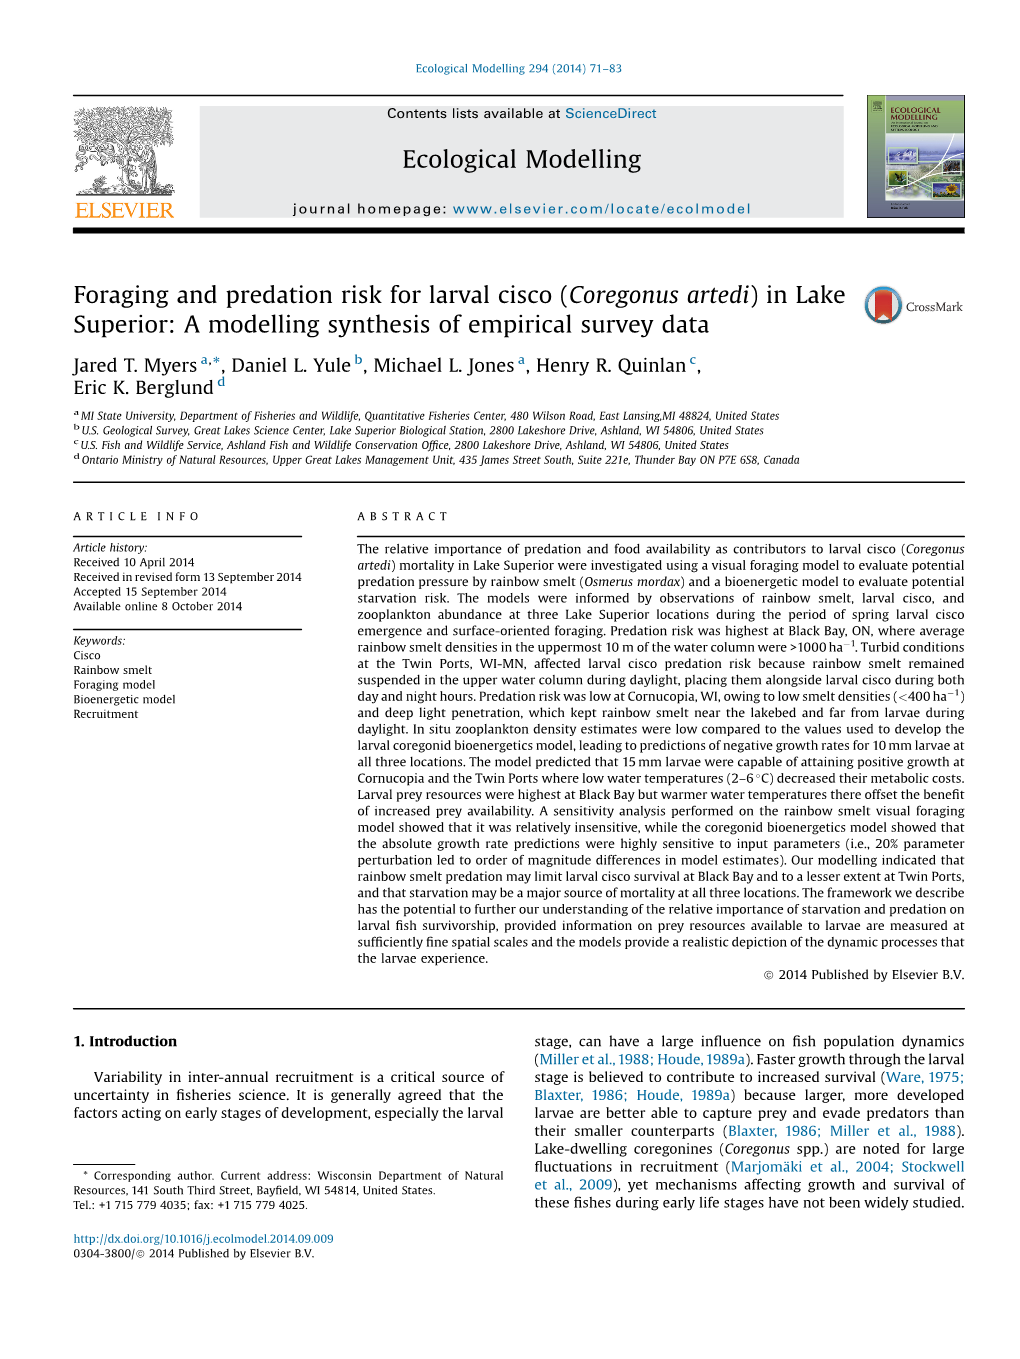 Foraging and Predation Risk for Larval Cisco (Coregonus Artedi) in Lake